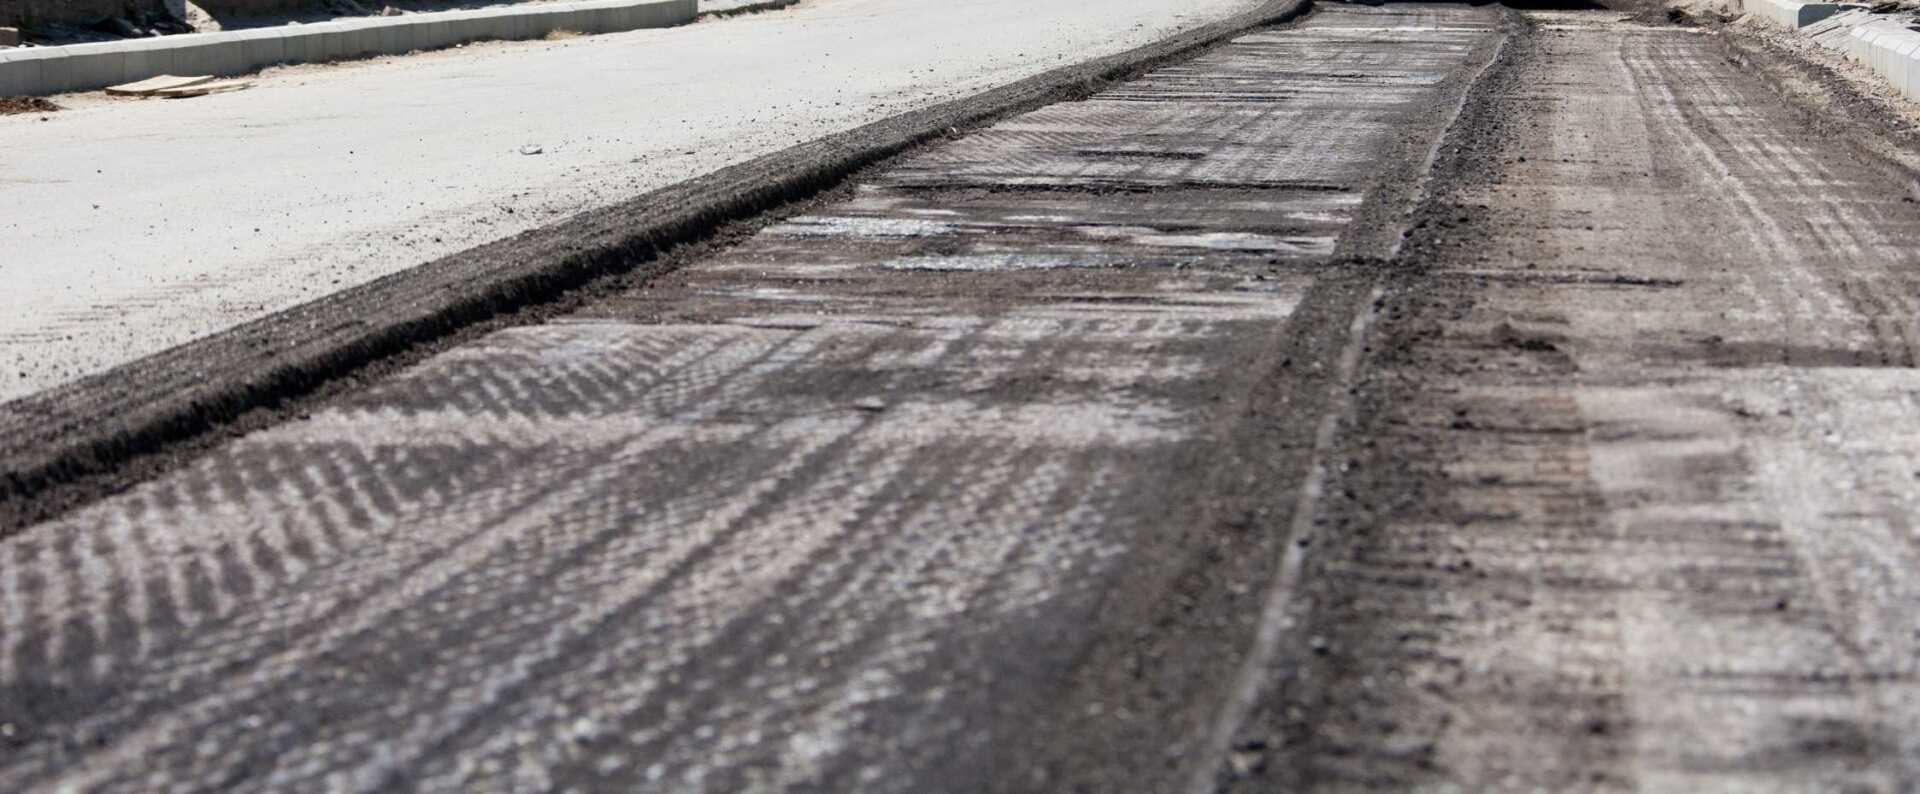 removal of pavement using asphalt milling